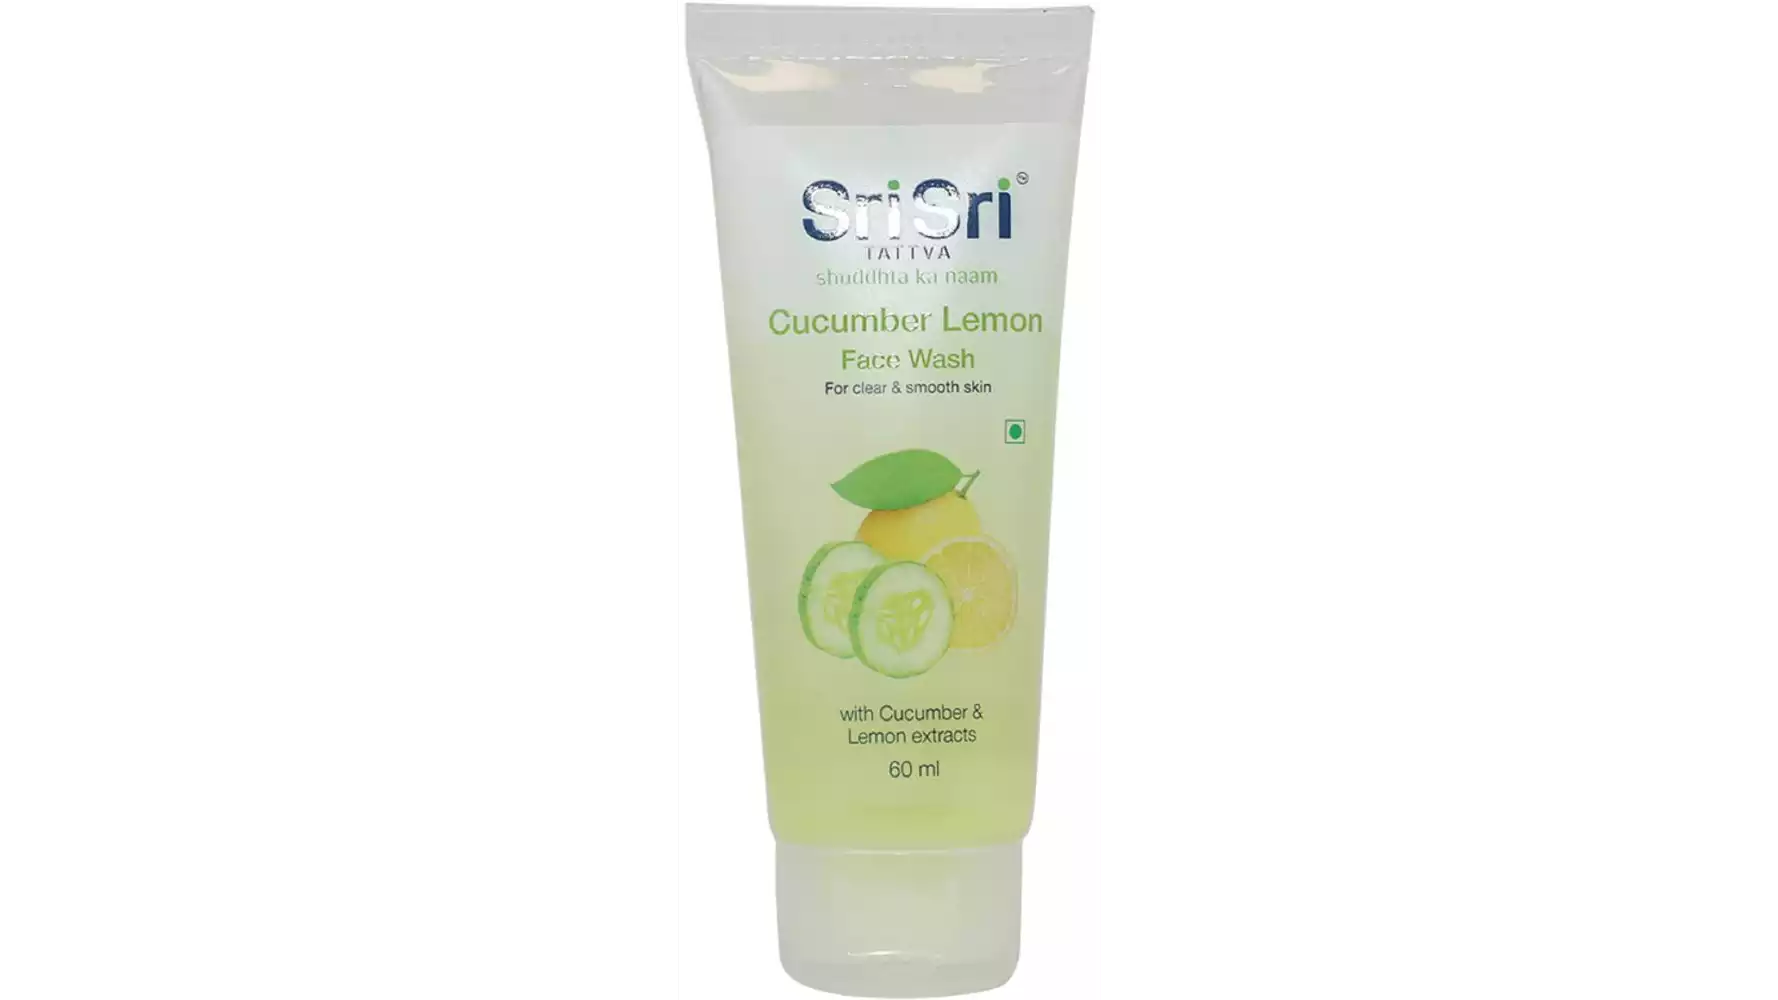 Sri Sri Tattva Cucumber Lemon Face Wash (60ml)